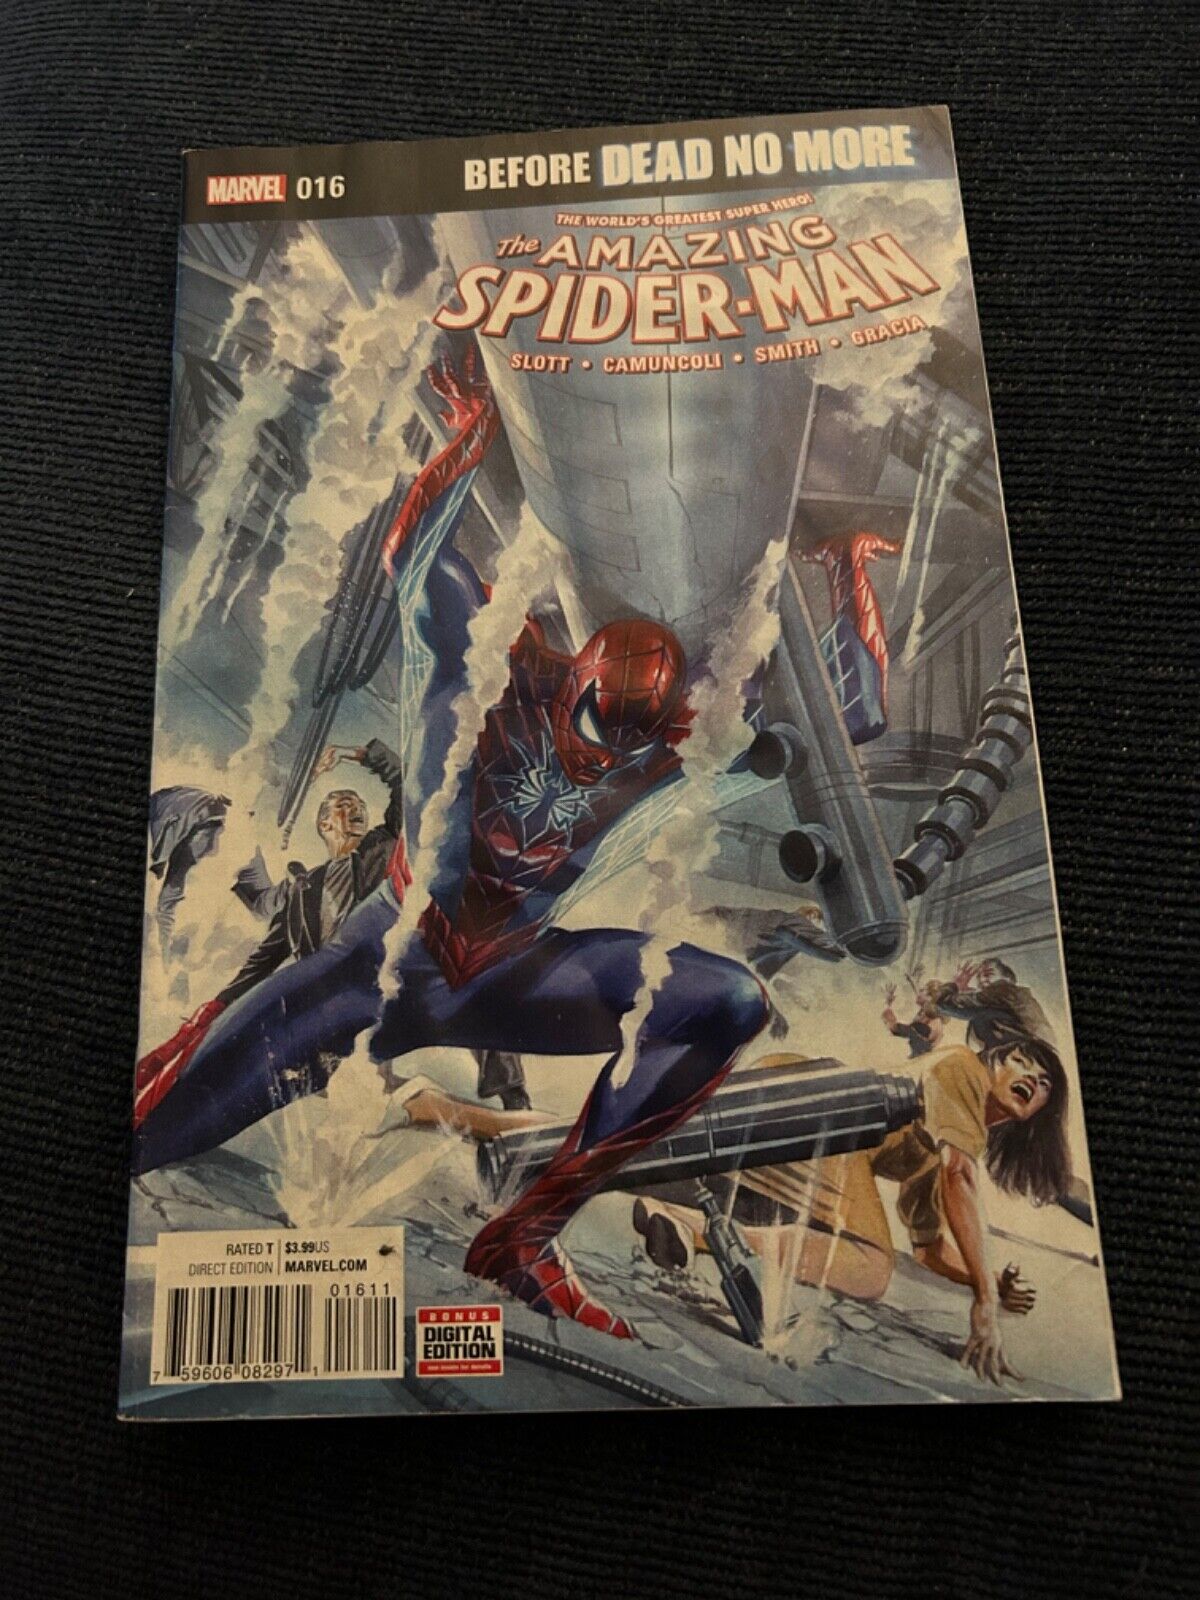 The Amazing Spider-Man Volume 4 #16 - October 2016